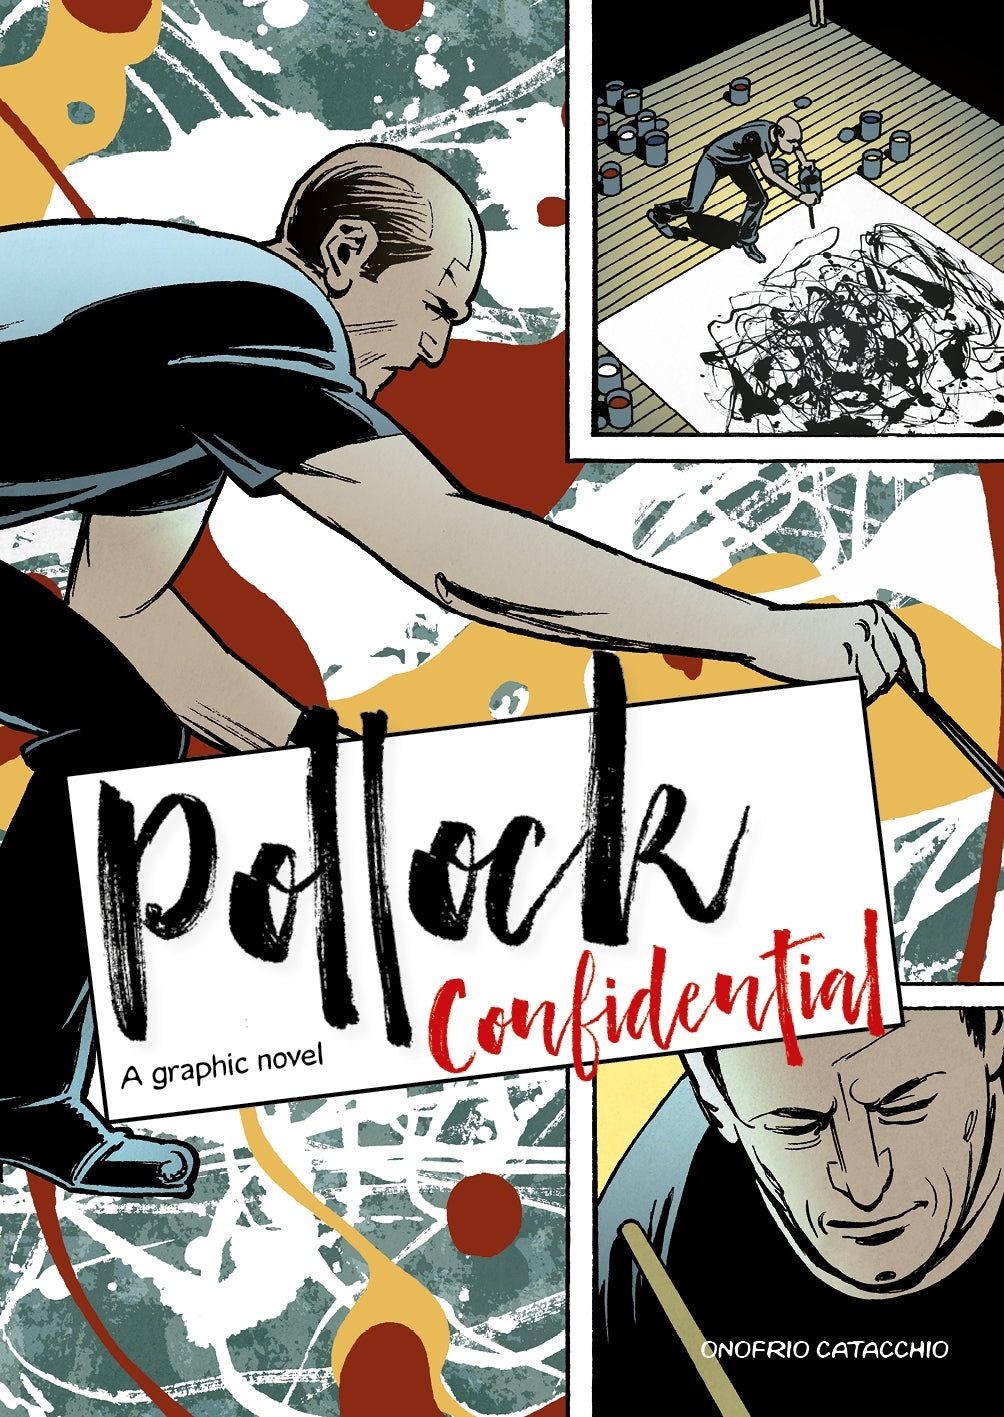 Pollock Confidential by Onofrio Catacchio